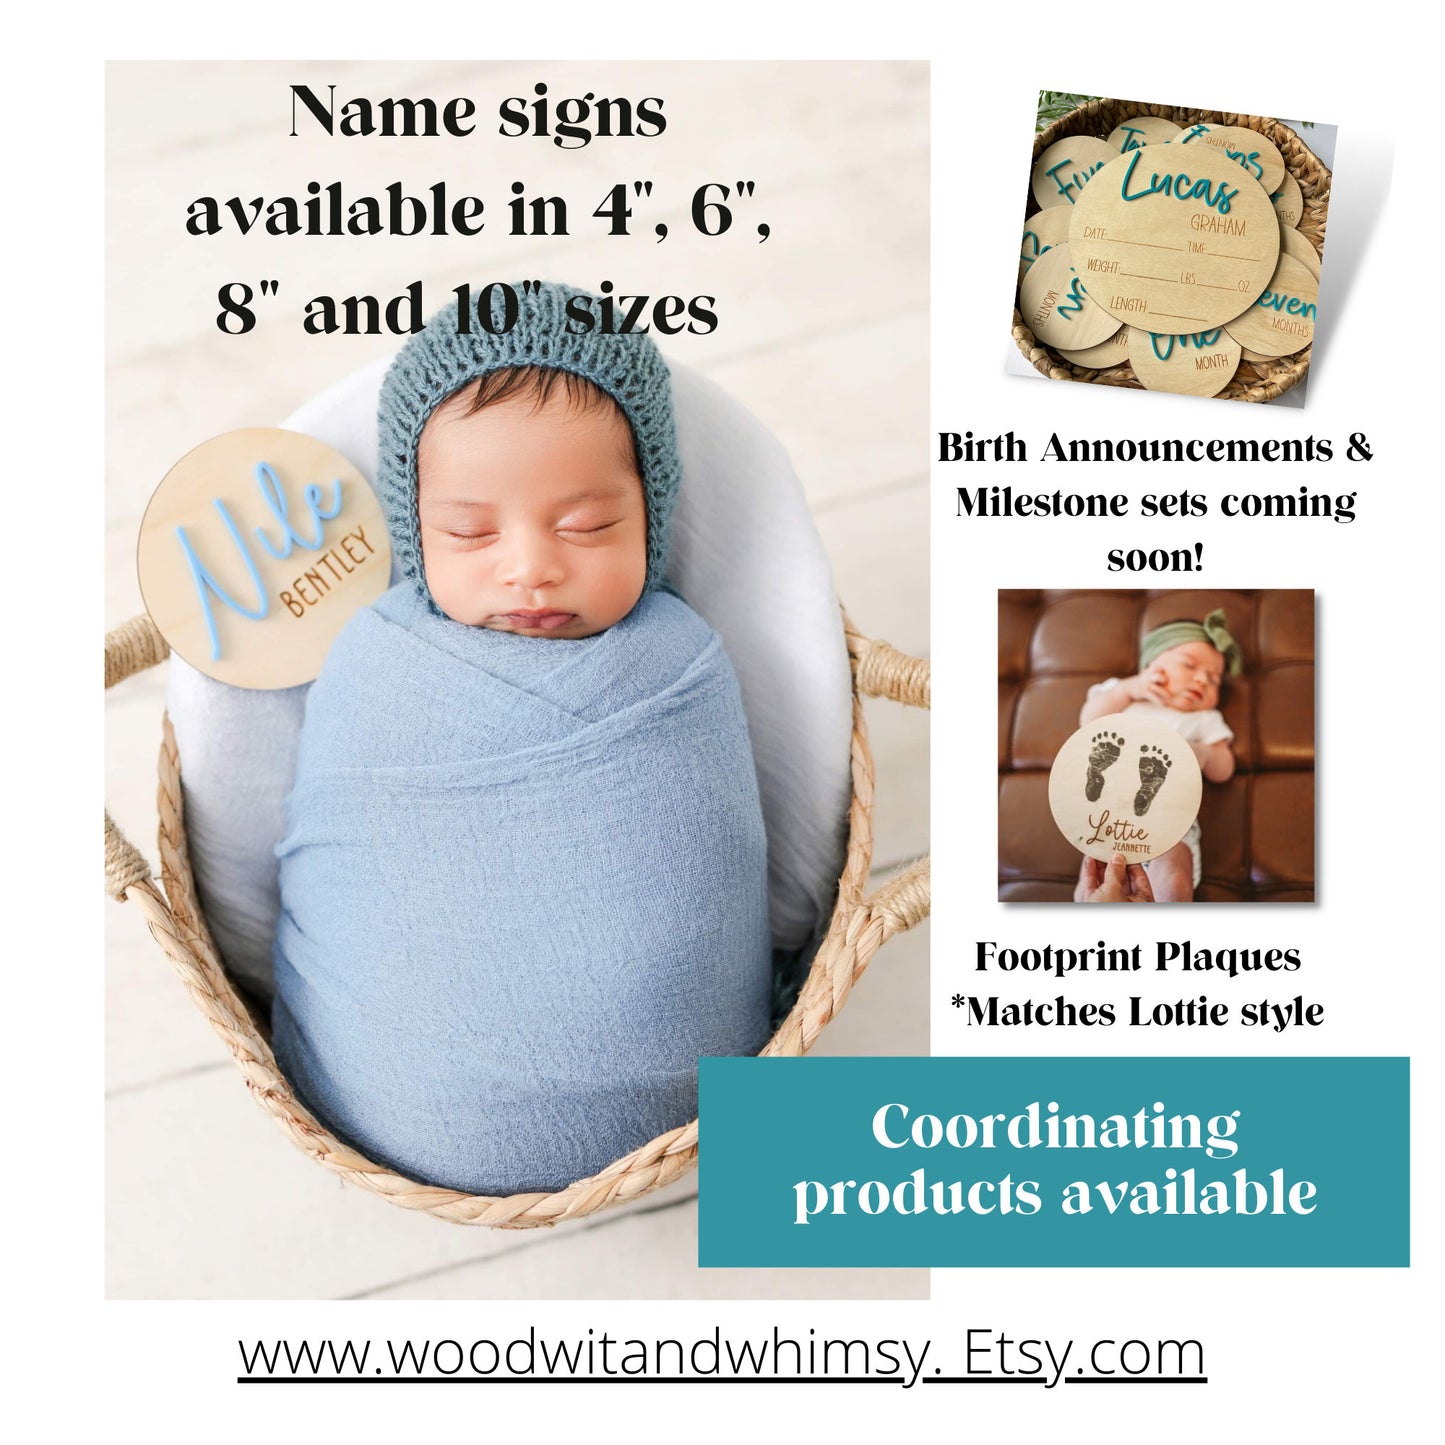 Nile Bentley Baby Name Sign